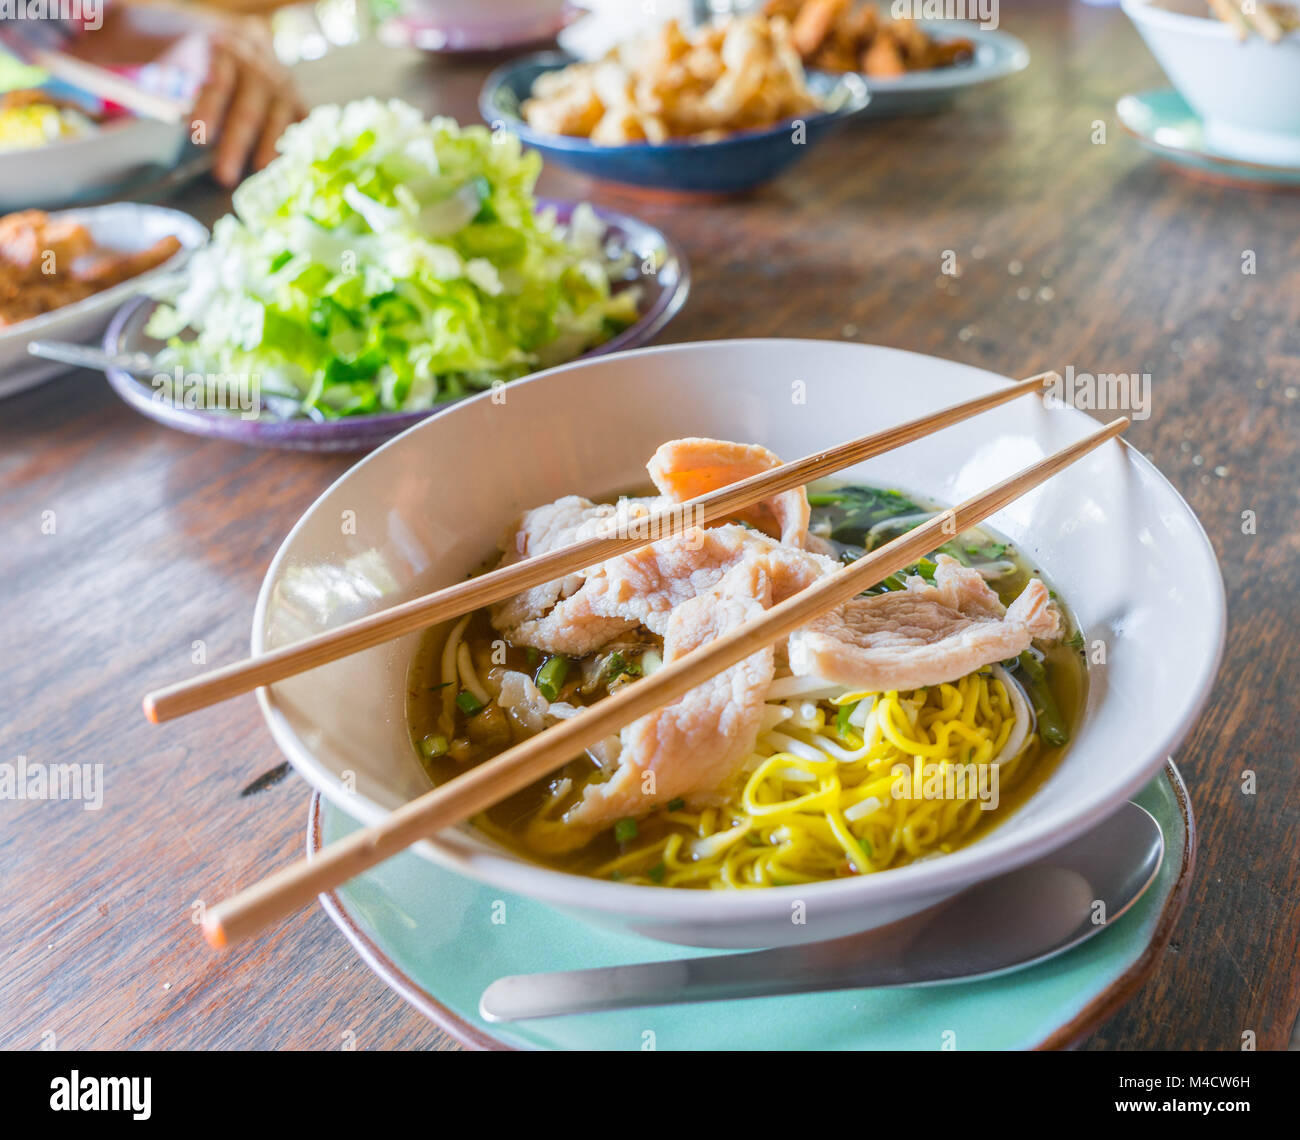 Asiatische Lebensmittel mit STCKS am Set Tabelle in selektiven Fokus hacken. Stockfoto